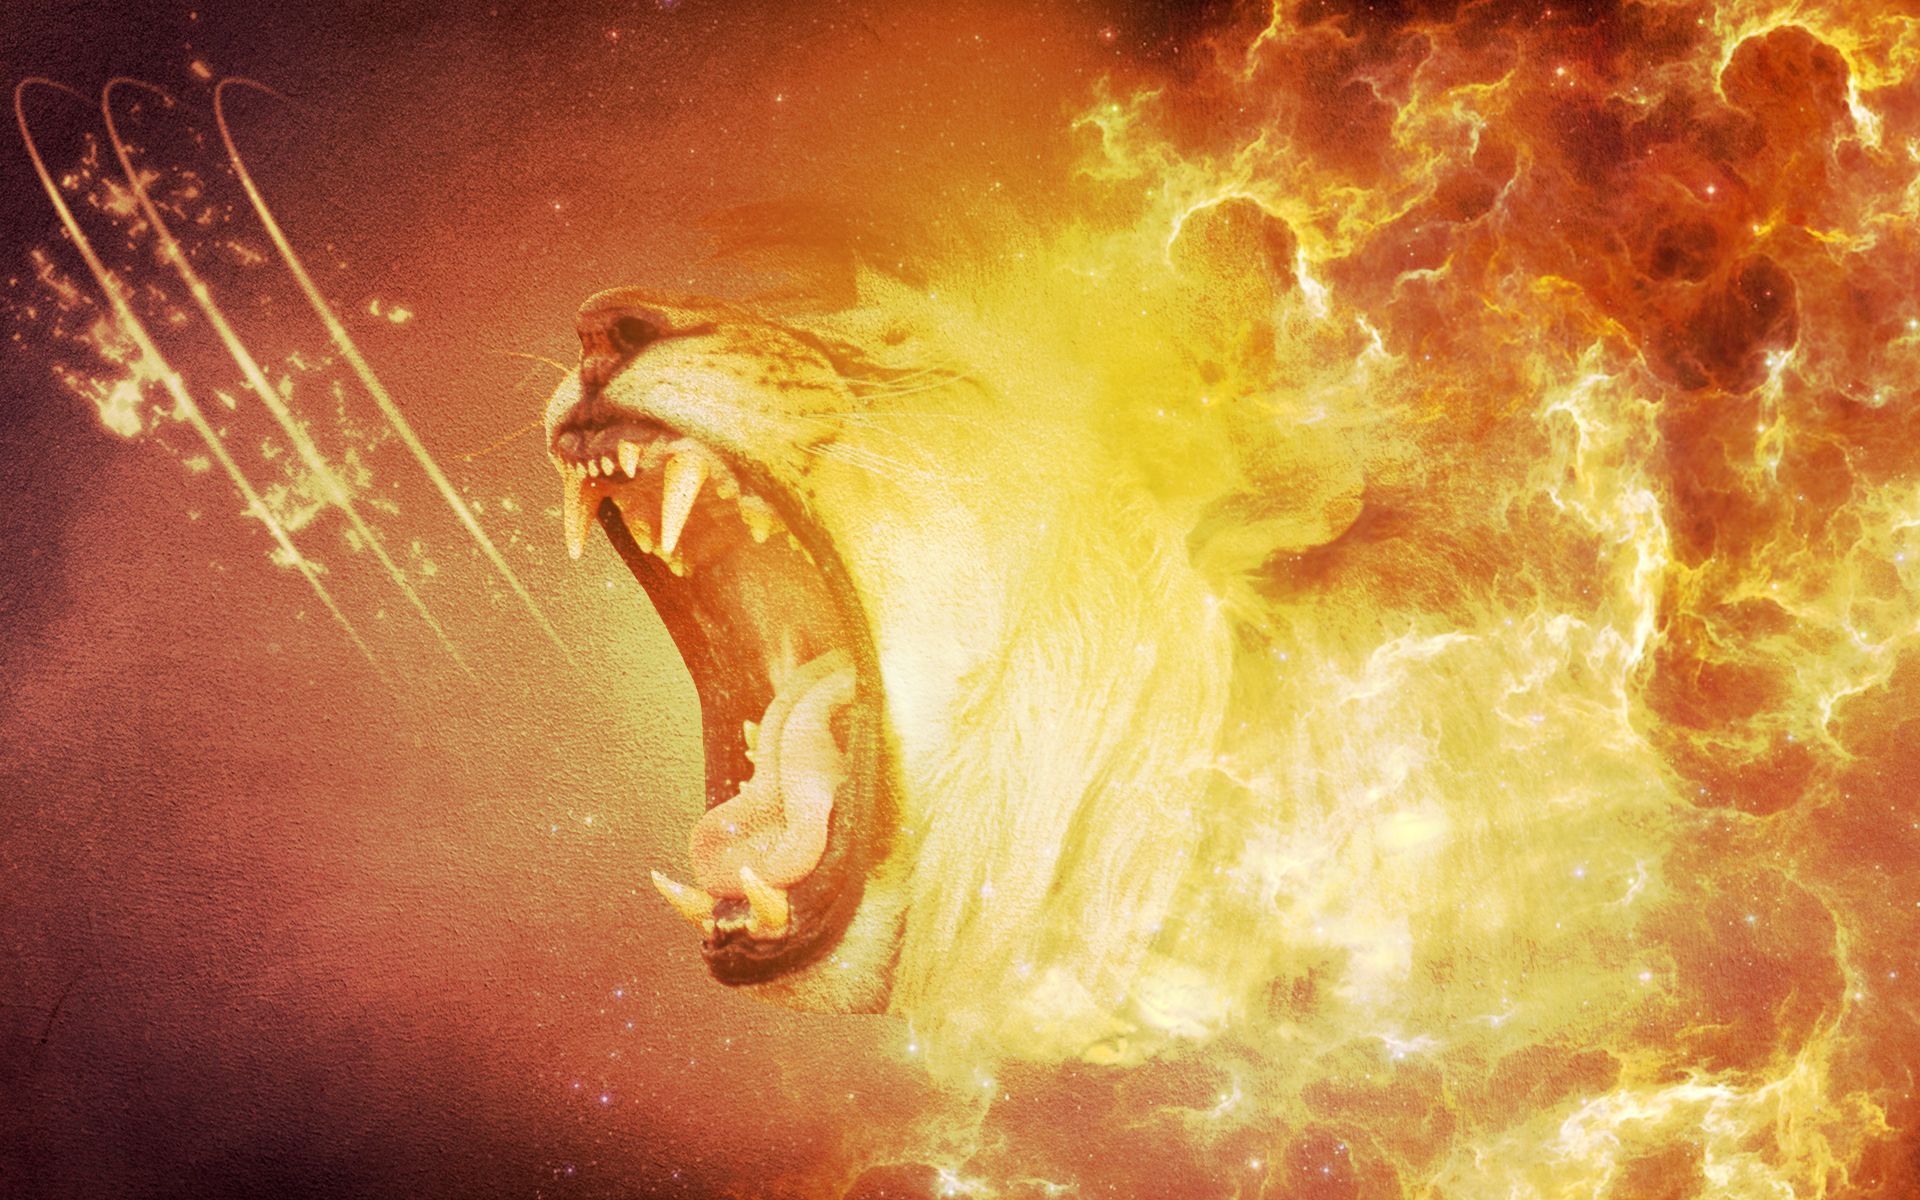 roaring lion image download